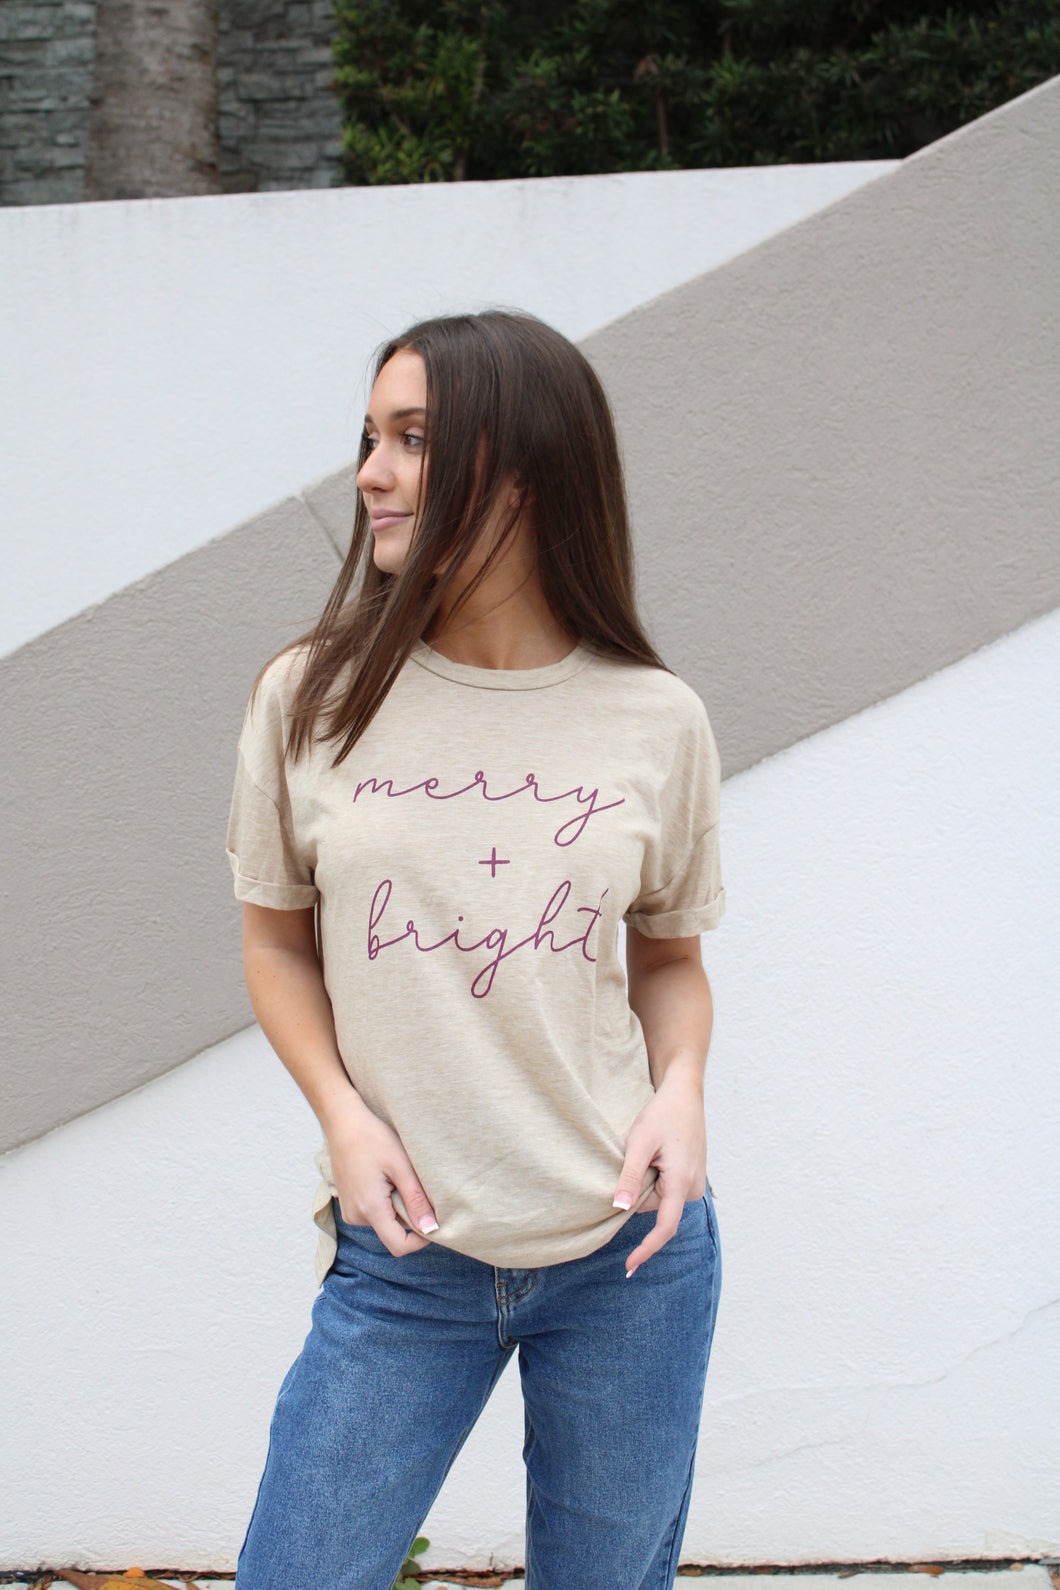 Merry + Bright T-Shirt